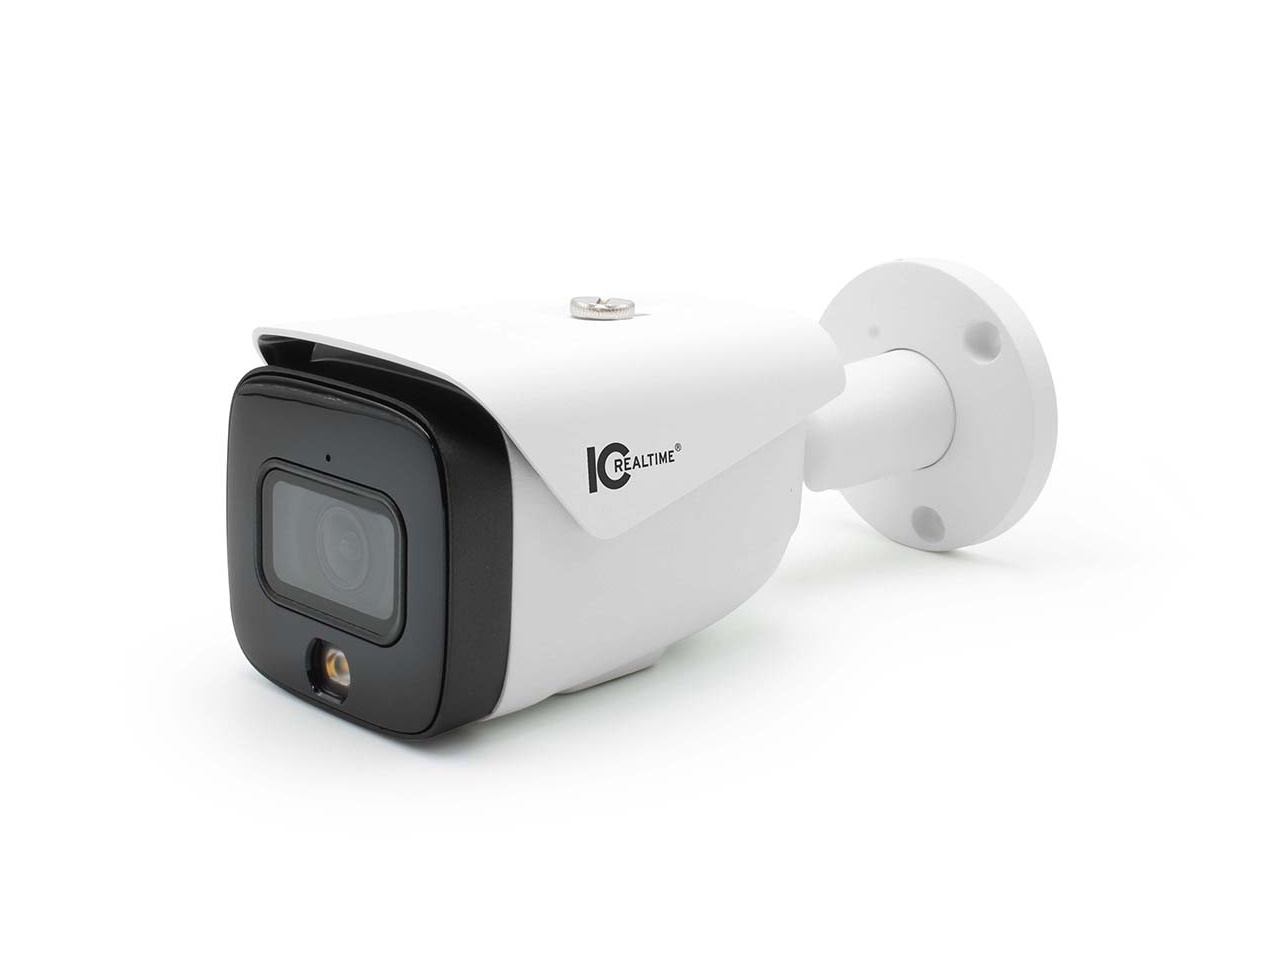 IPMX-B40F-W1-LED 4MP Full-Color LED AI Mini Bullet Network Camera by ICRealtime